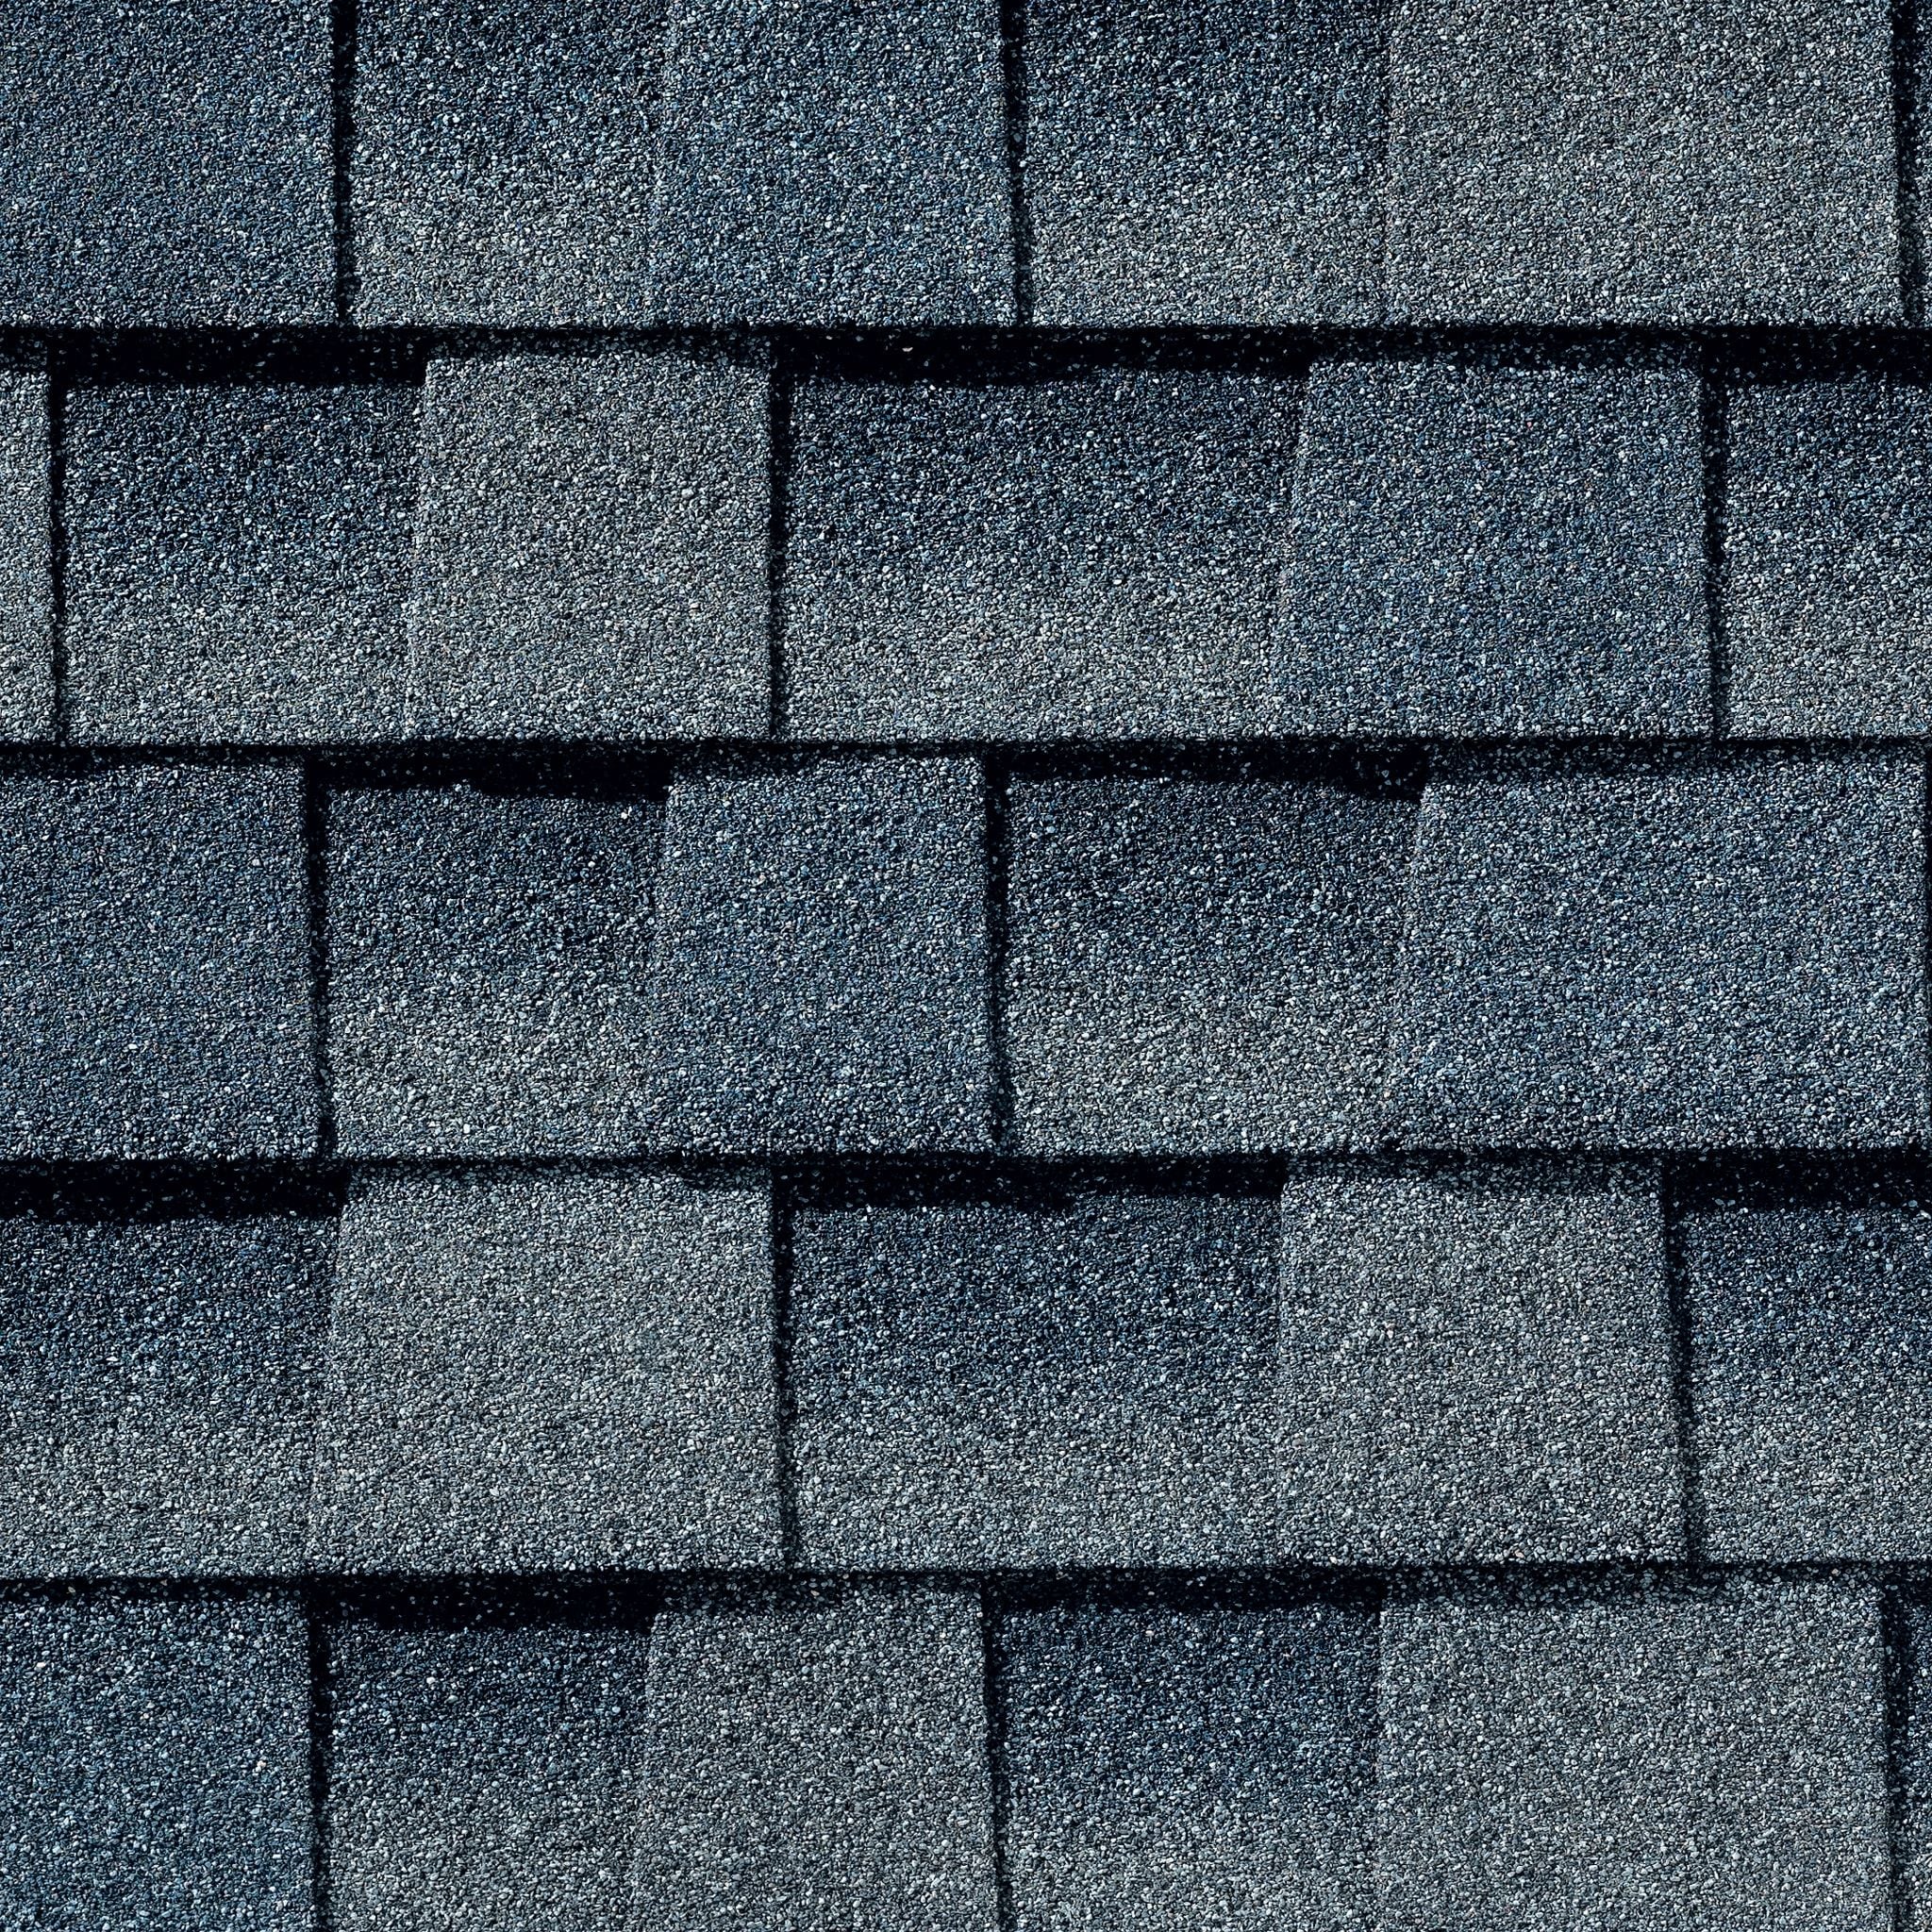 Timberline Hdz Biscayne Blue Laminated Architectural Roof Shingles (33.33-sq ft per Bundle) | - GAF 0486095